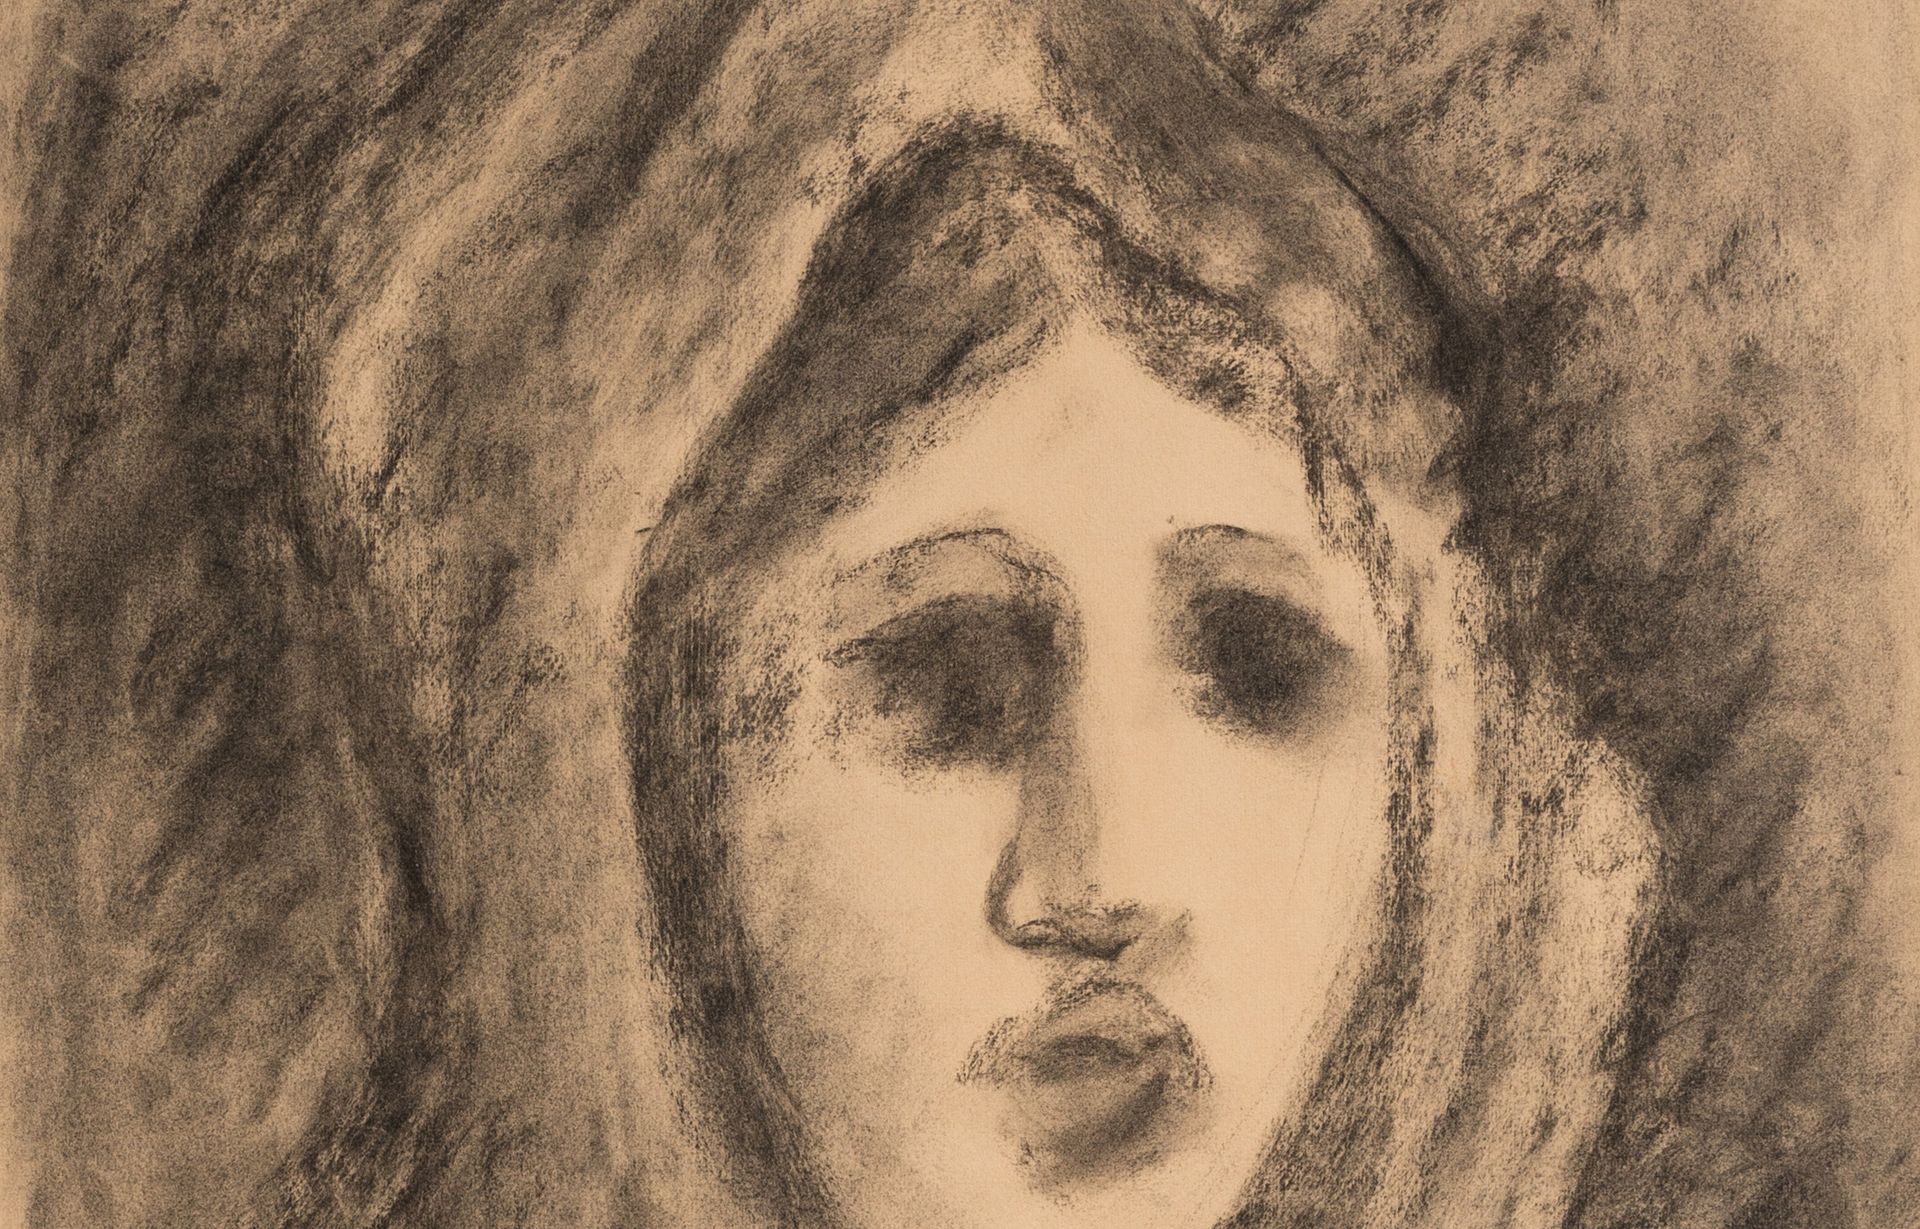 Null 马内-卡茨（乌克兰，1894-1962），伊曼纽尔-马内-卡茨说。
一个女人的脸

纸上炭笔画。 
左下方有签名。 

高62厘米，宽47.5厘米。